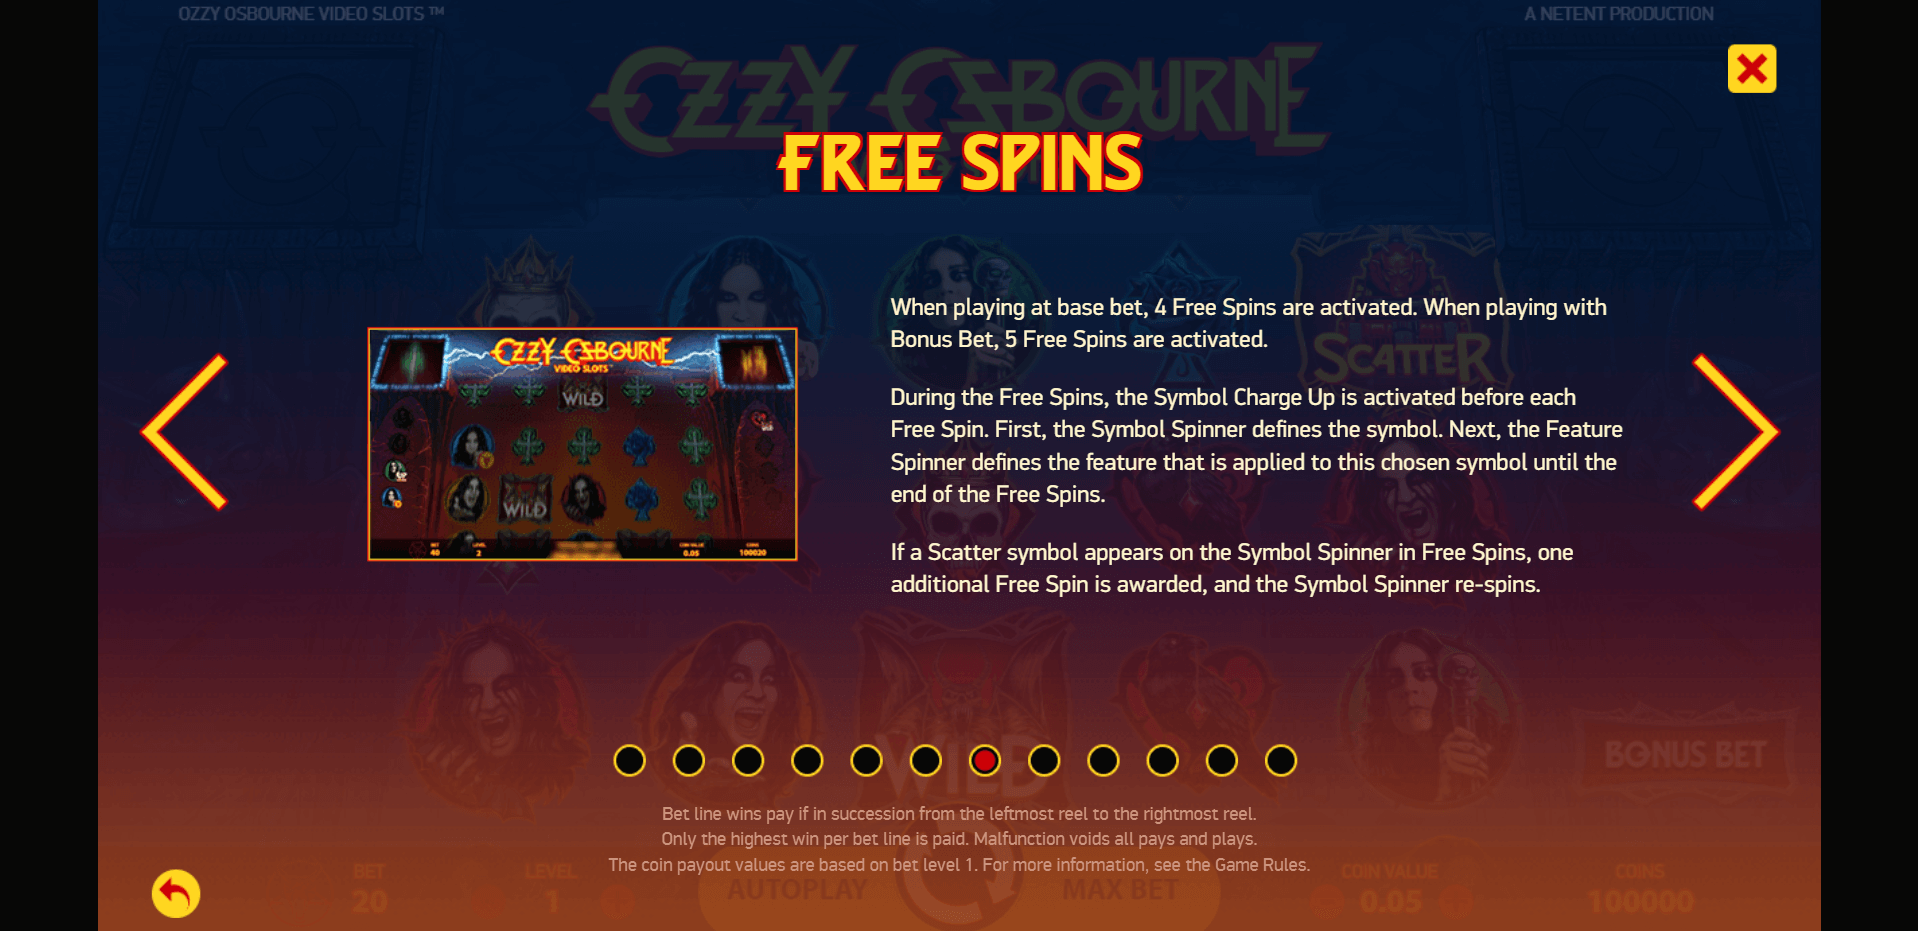 ozzy osbourne slot machine detail image 6